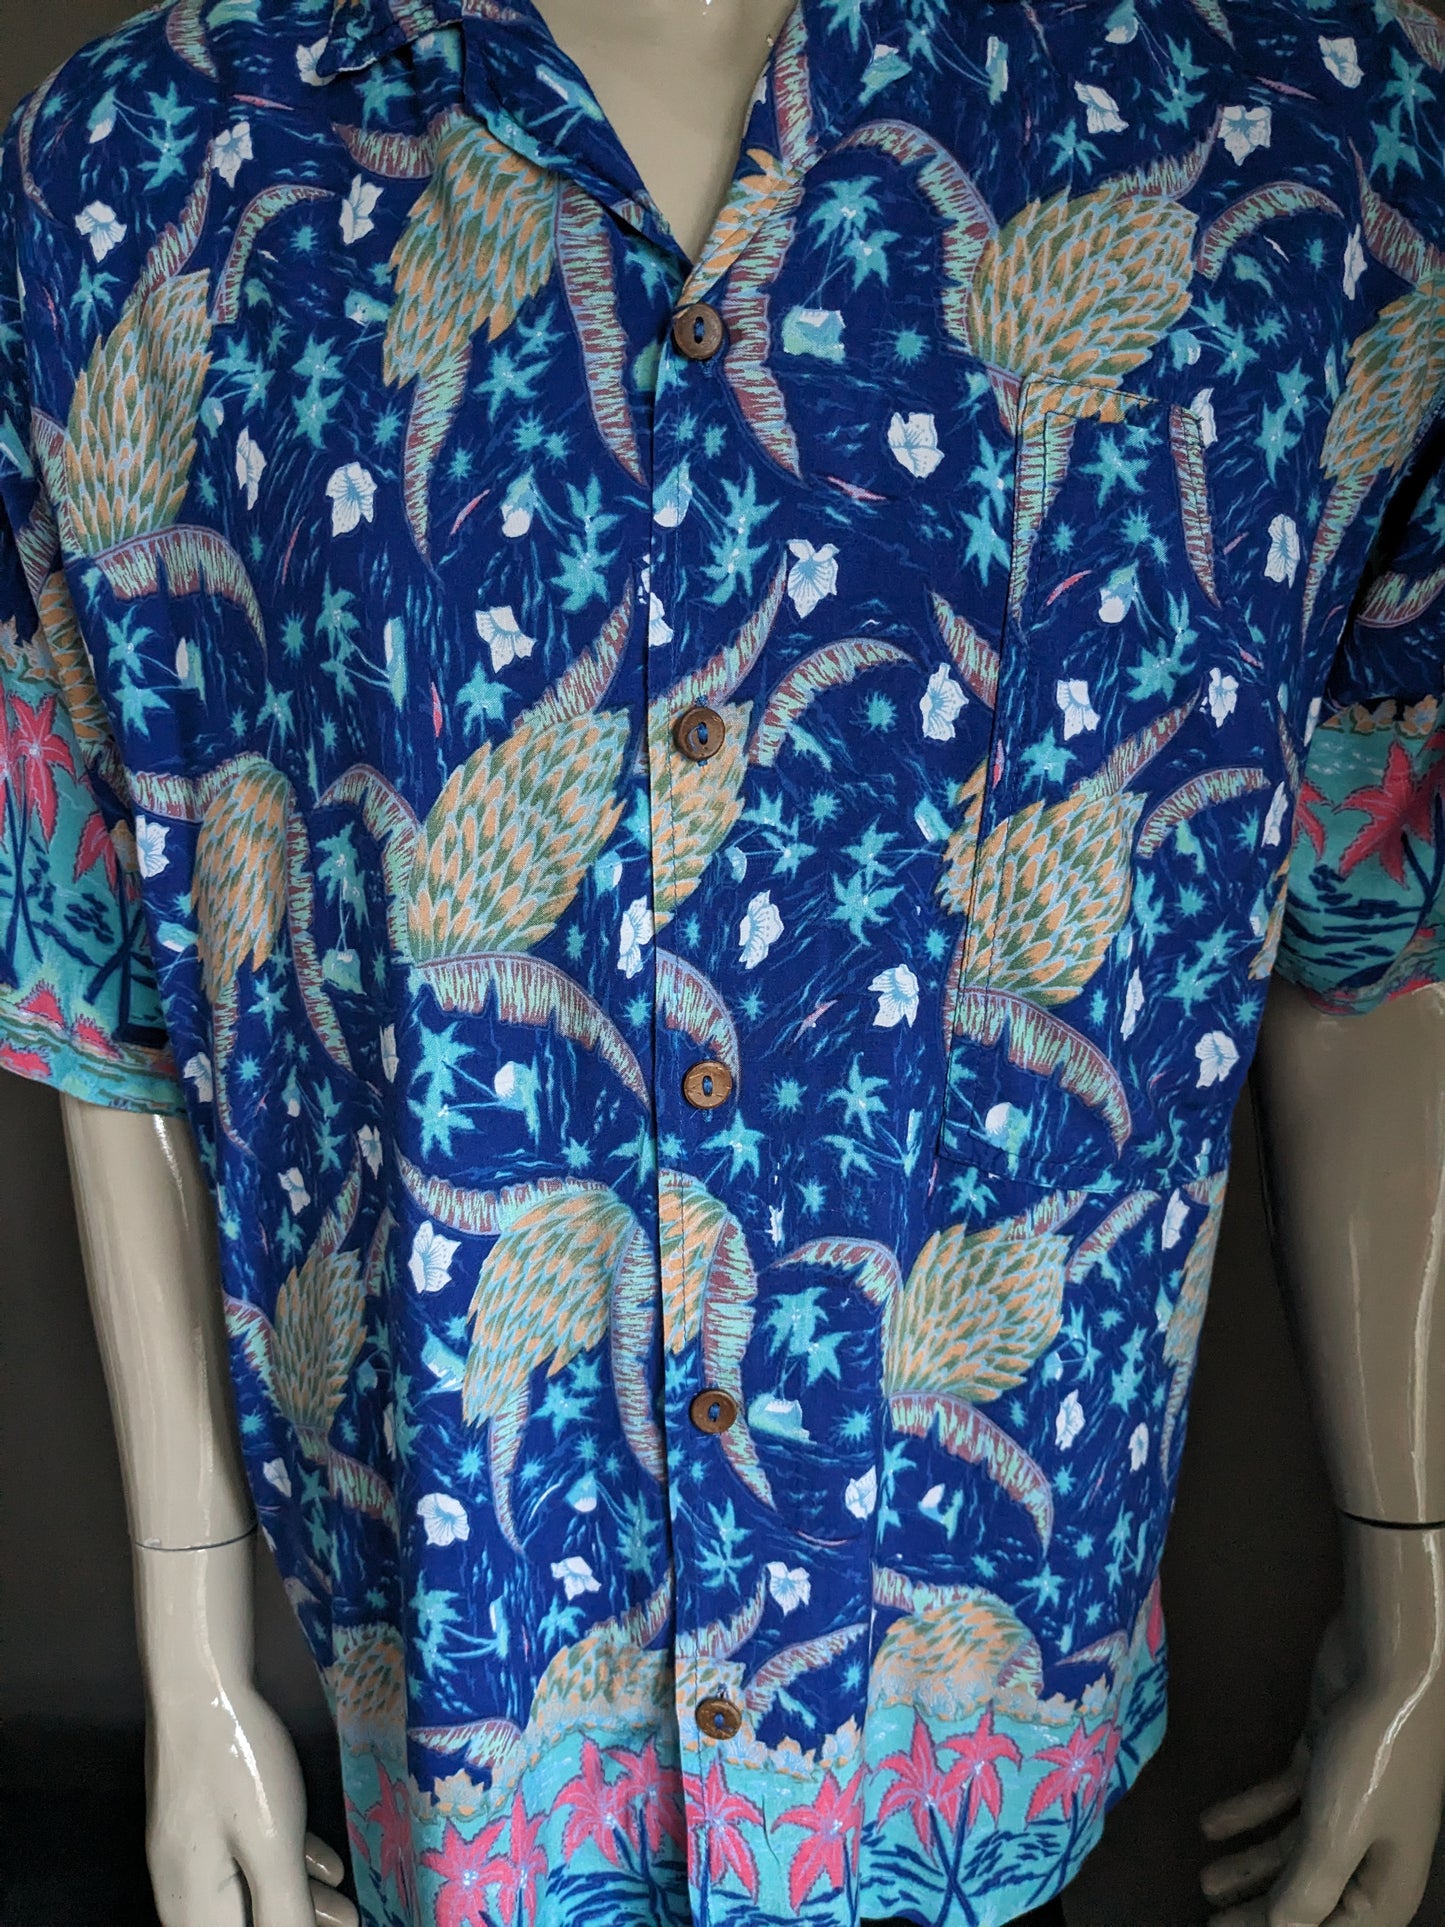 Rainbow Jo Maui Original Hawaii Shirt Sleeve. Impression verte rose orange bleu. Taille xl.